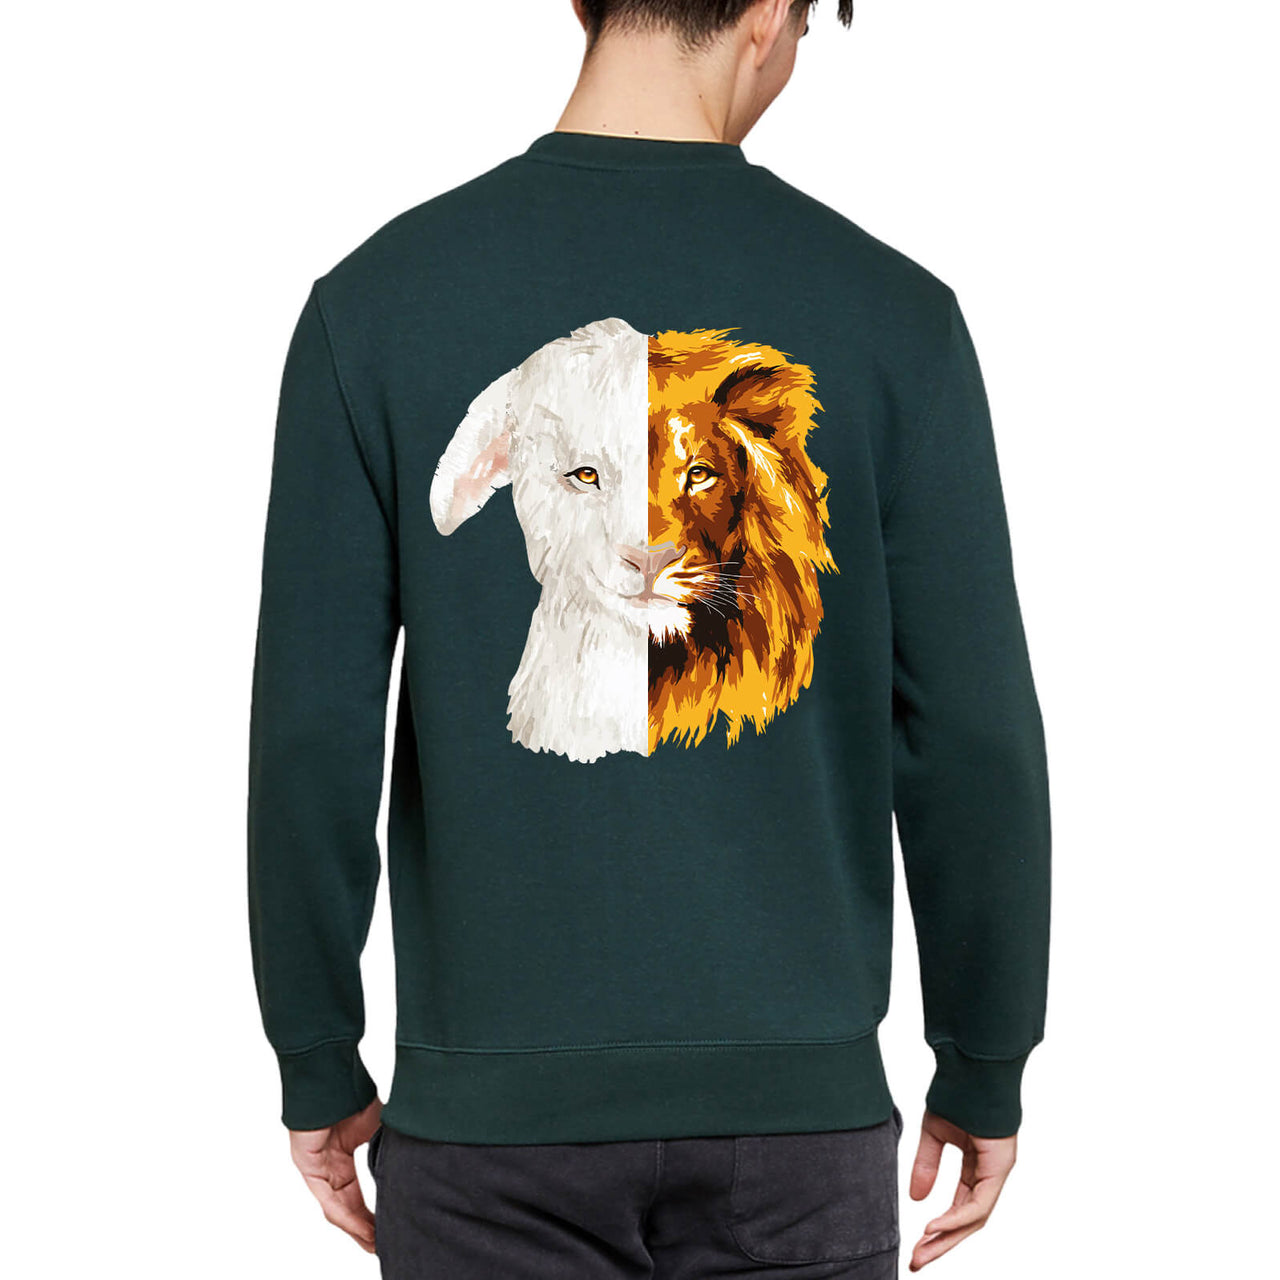 Lion And The Lamb Men's Crewneck Sweatshirt